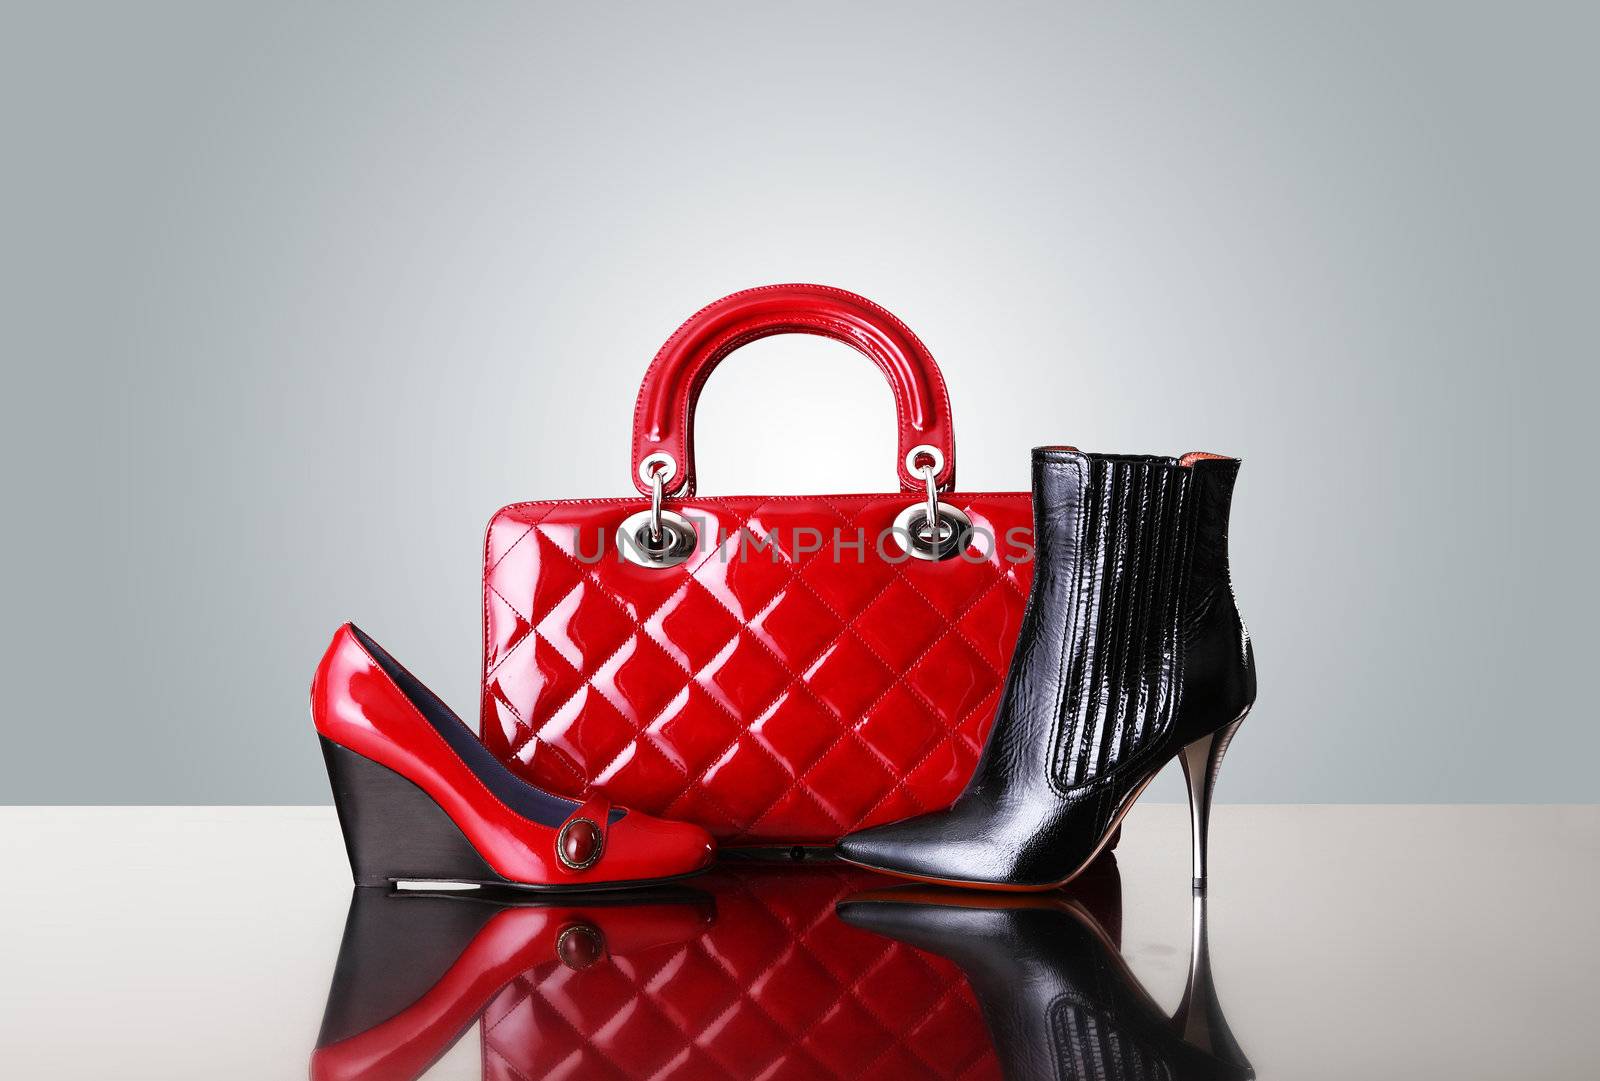 shoes and handbag, fashion photo